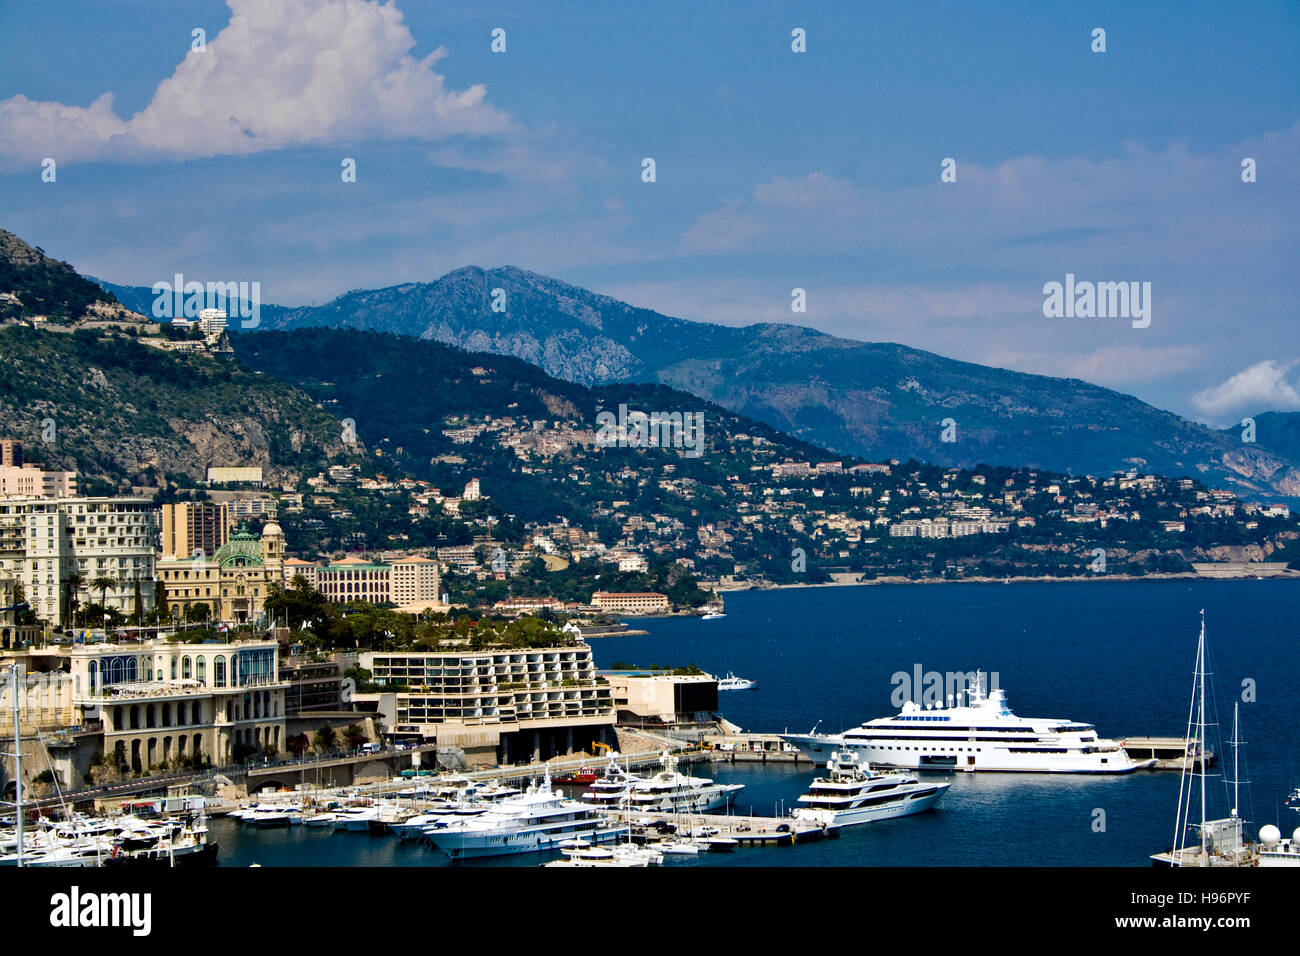 La baie de la ville, Monte Carlo, Monaco, Europe Banque D'Images